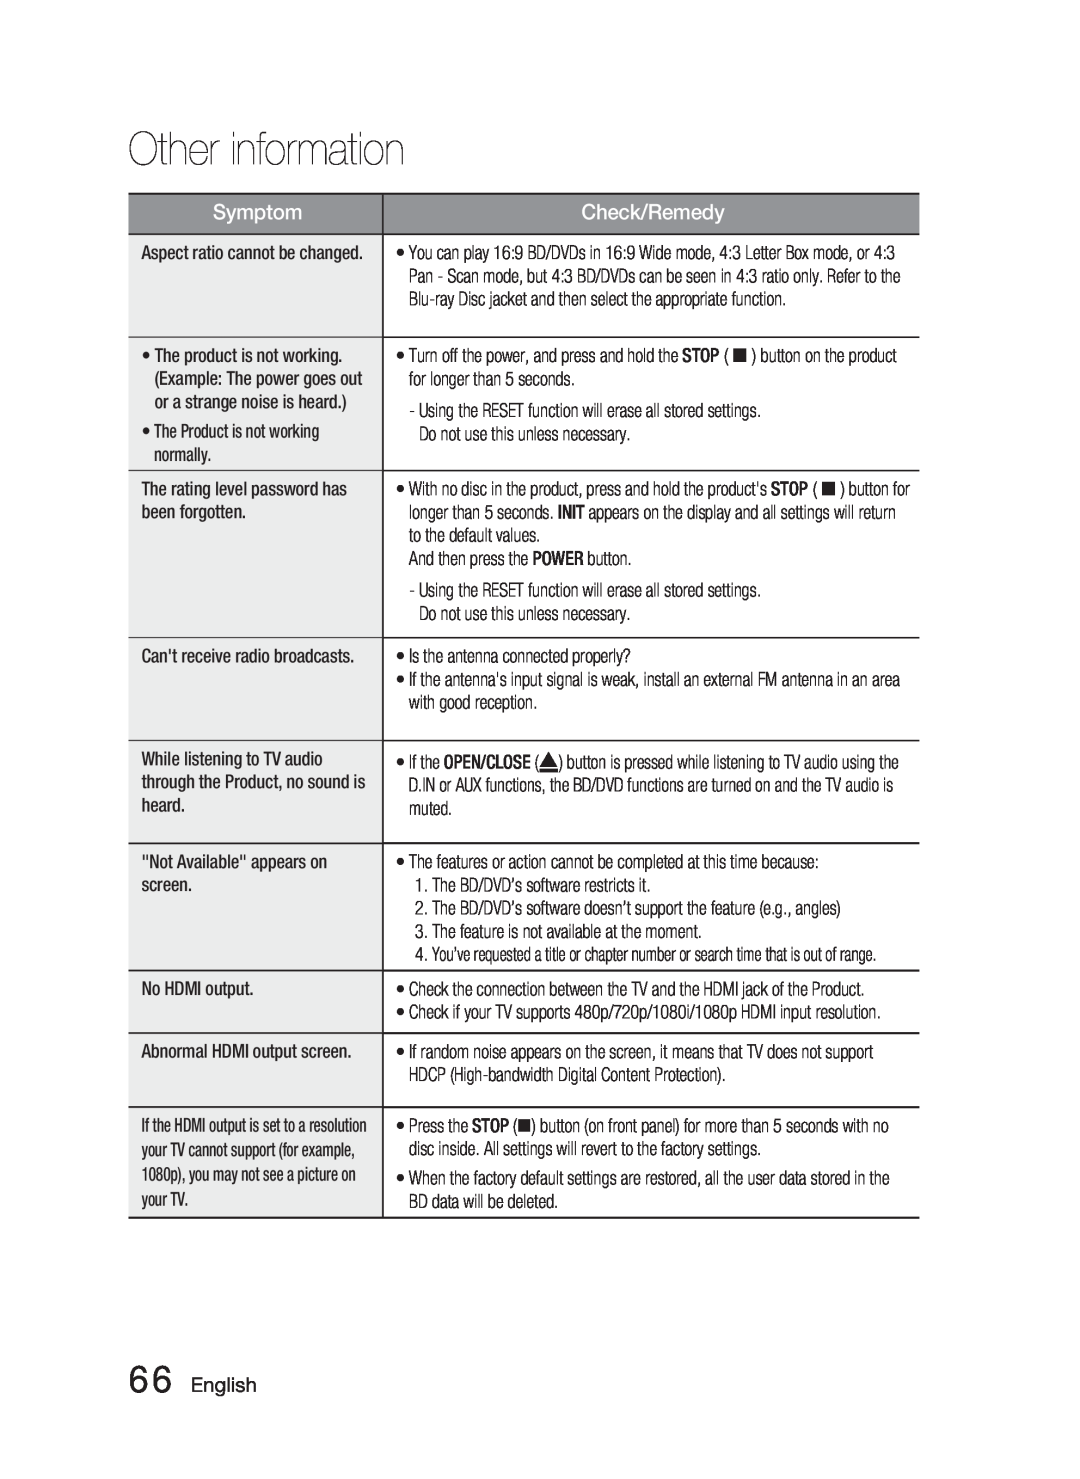 Samsung AH68-02279R user manual English, Other information, Symptom, Check/Remedy 